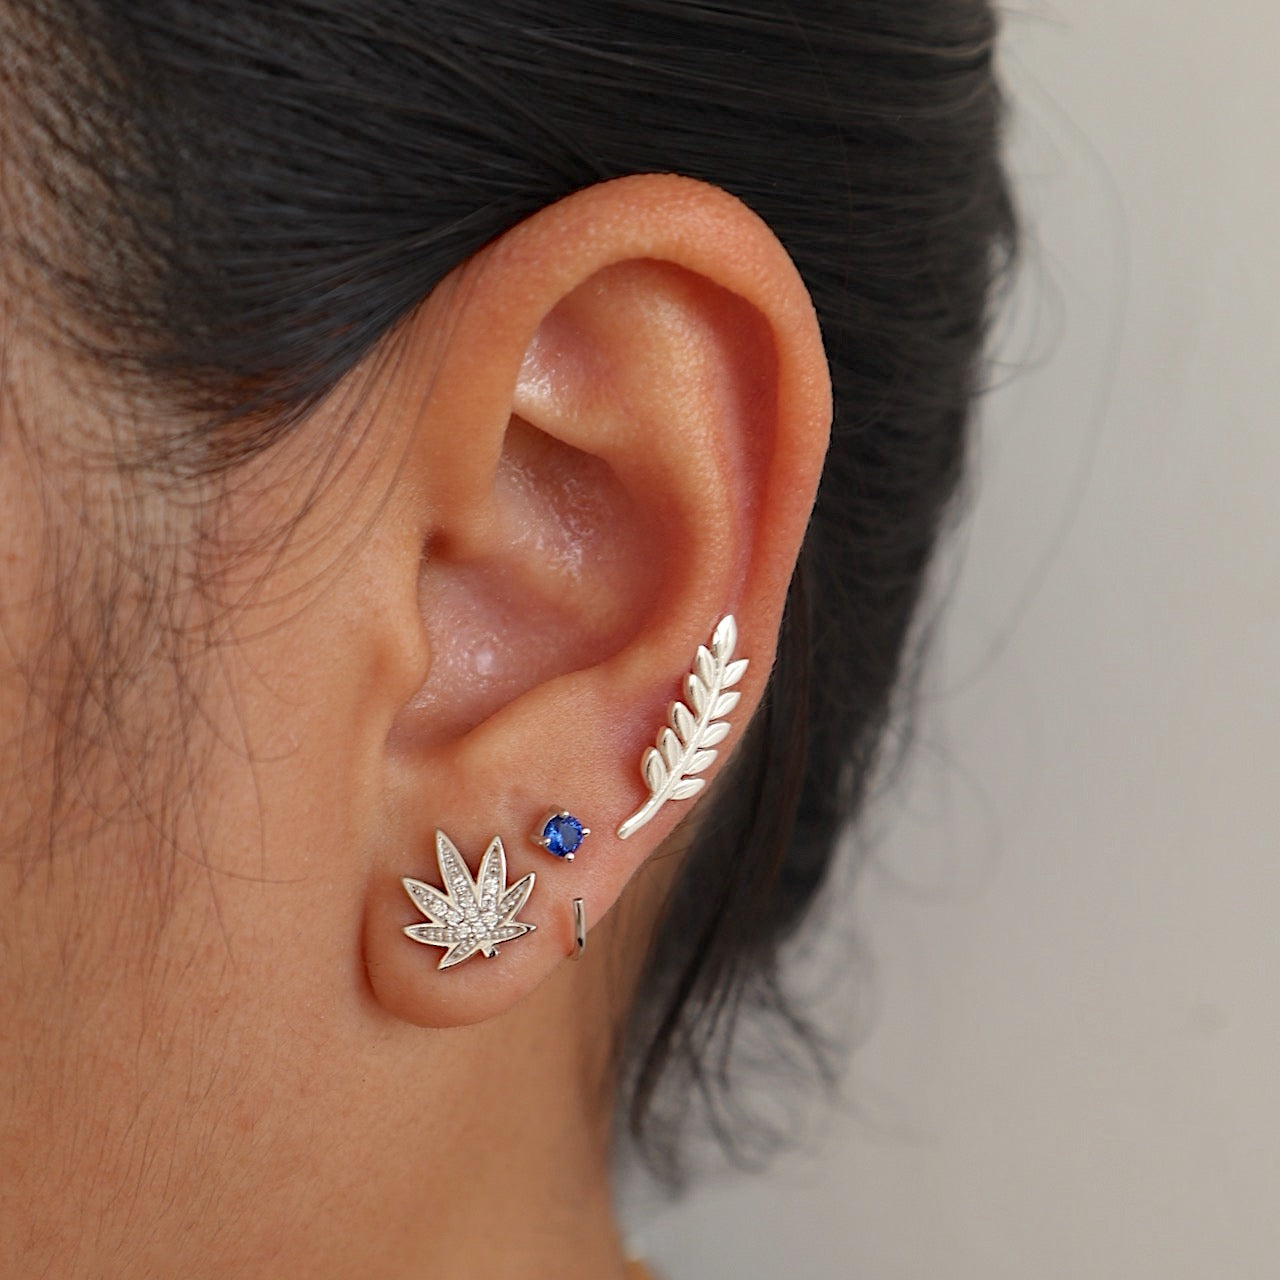 J&CO Jewellery Sparkly Trio Stud Earrings